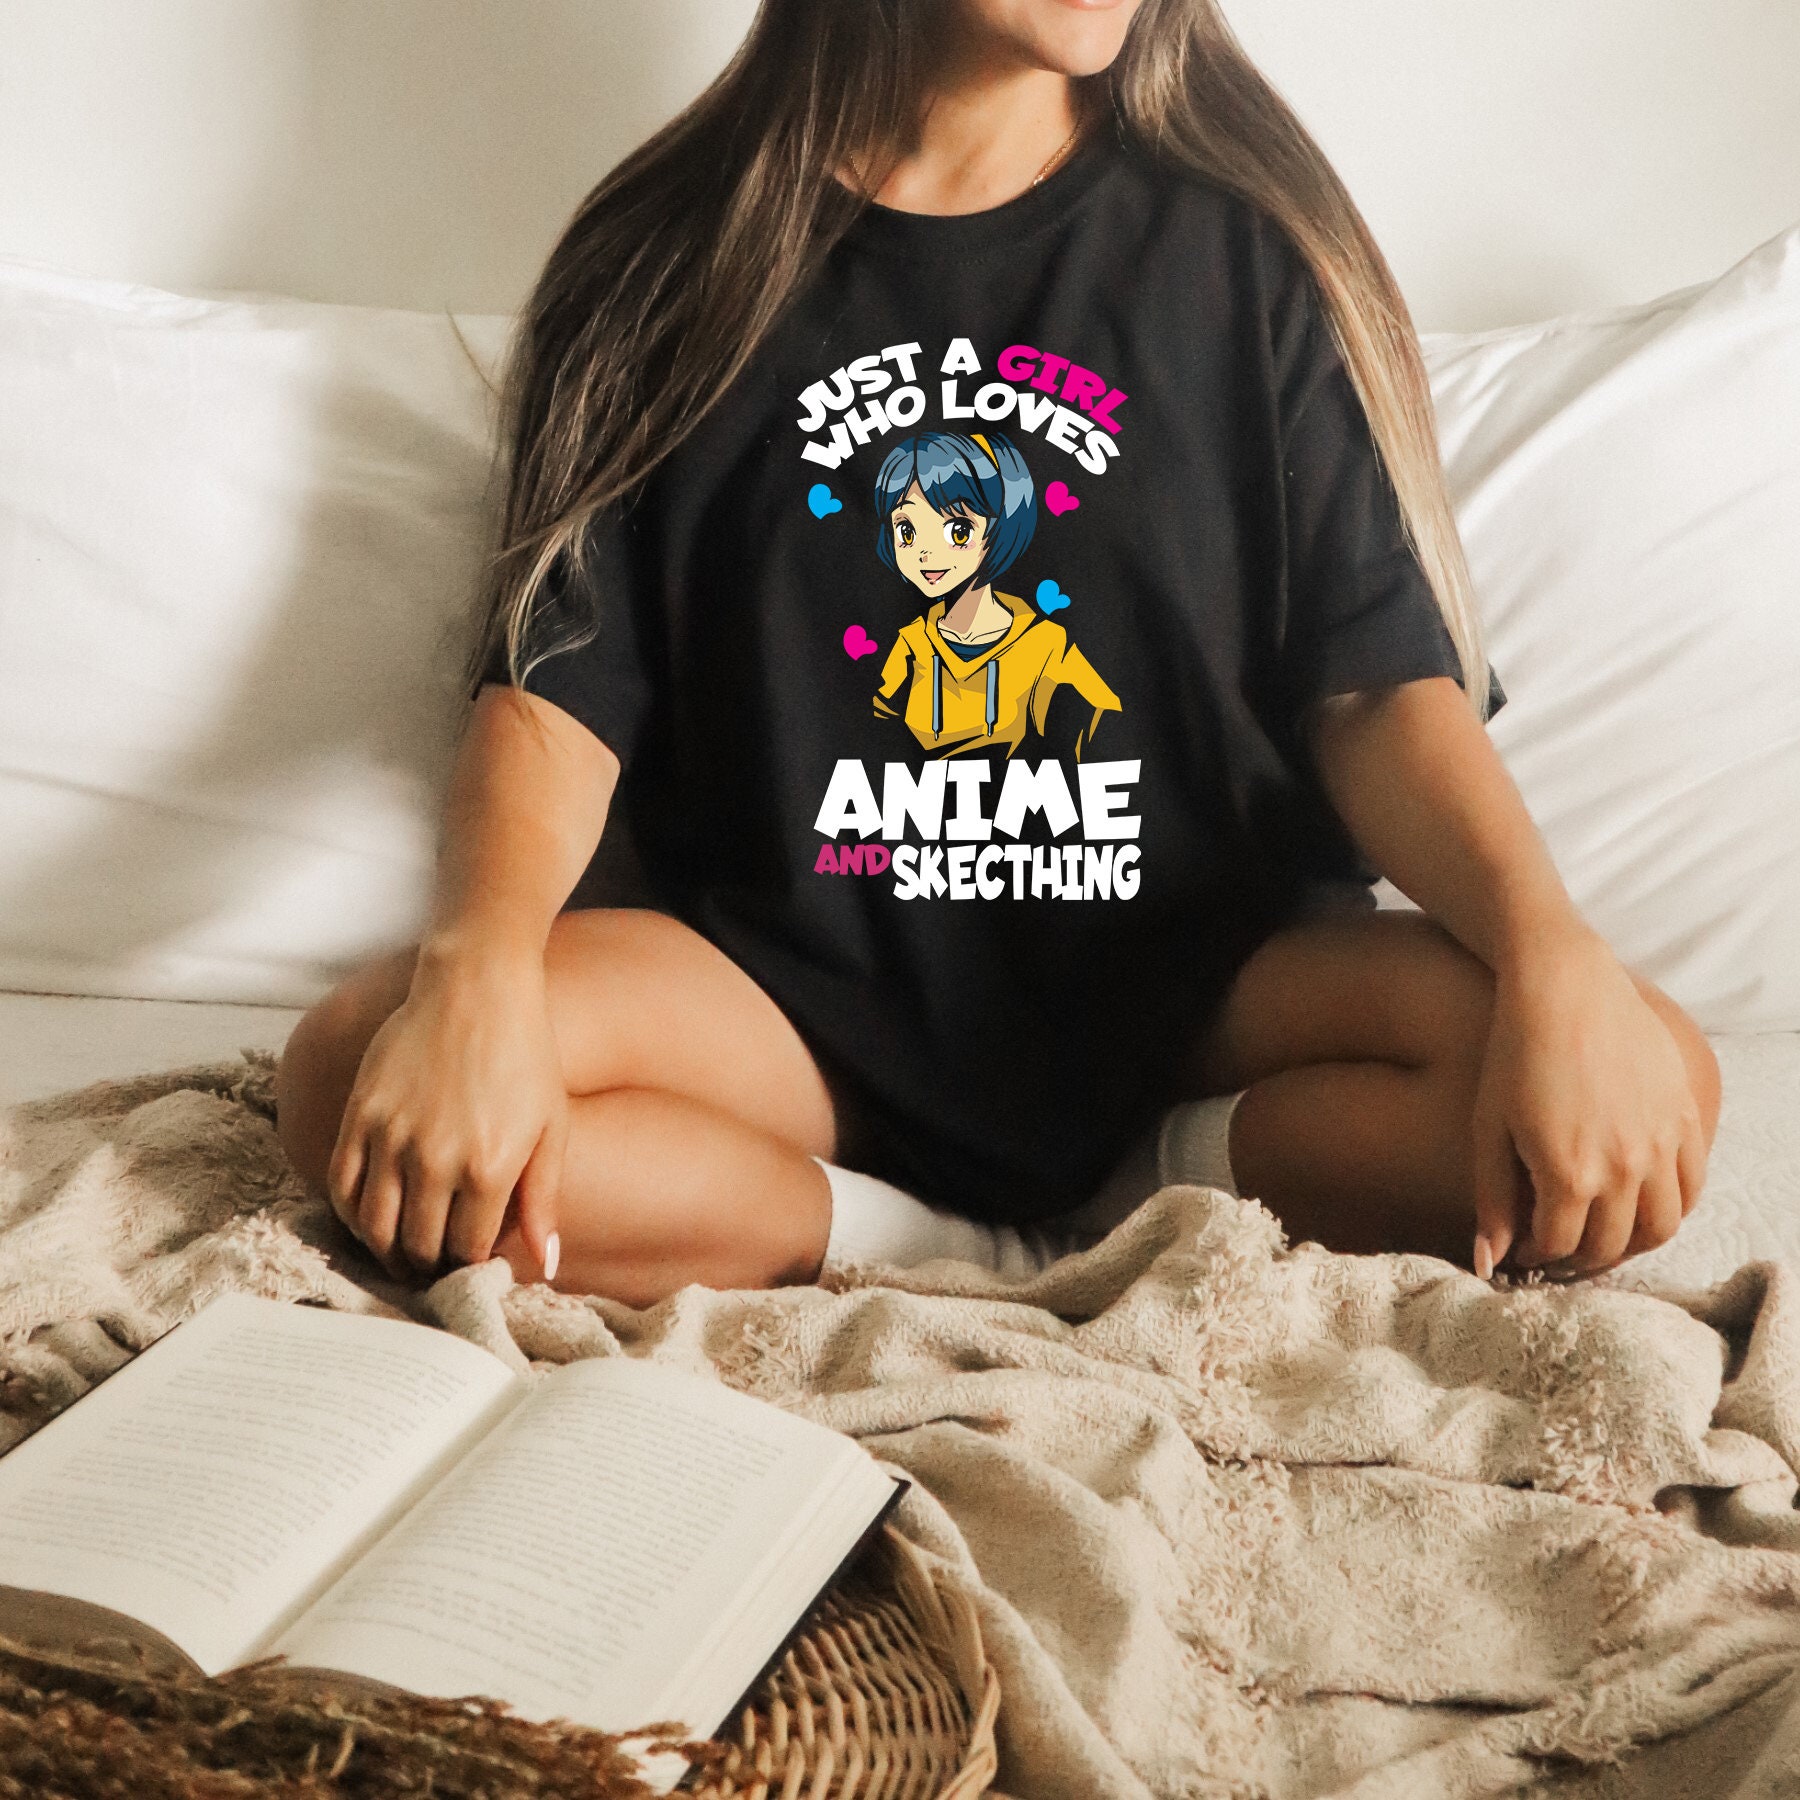 Moshi Moshi Shirts  Japanese Anime T Shirts & Pop-Culture tees